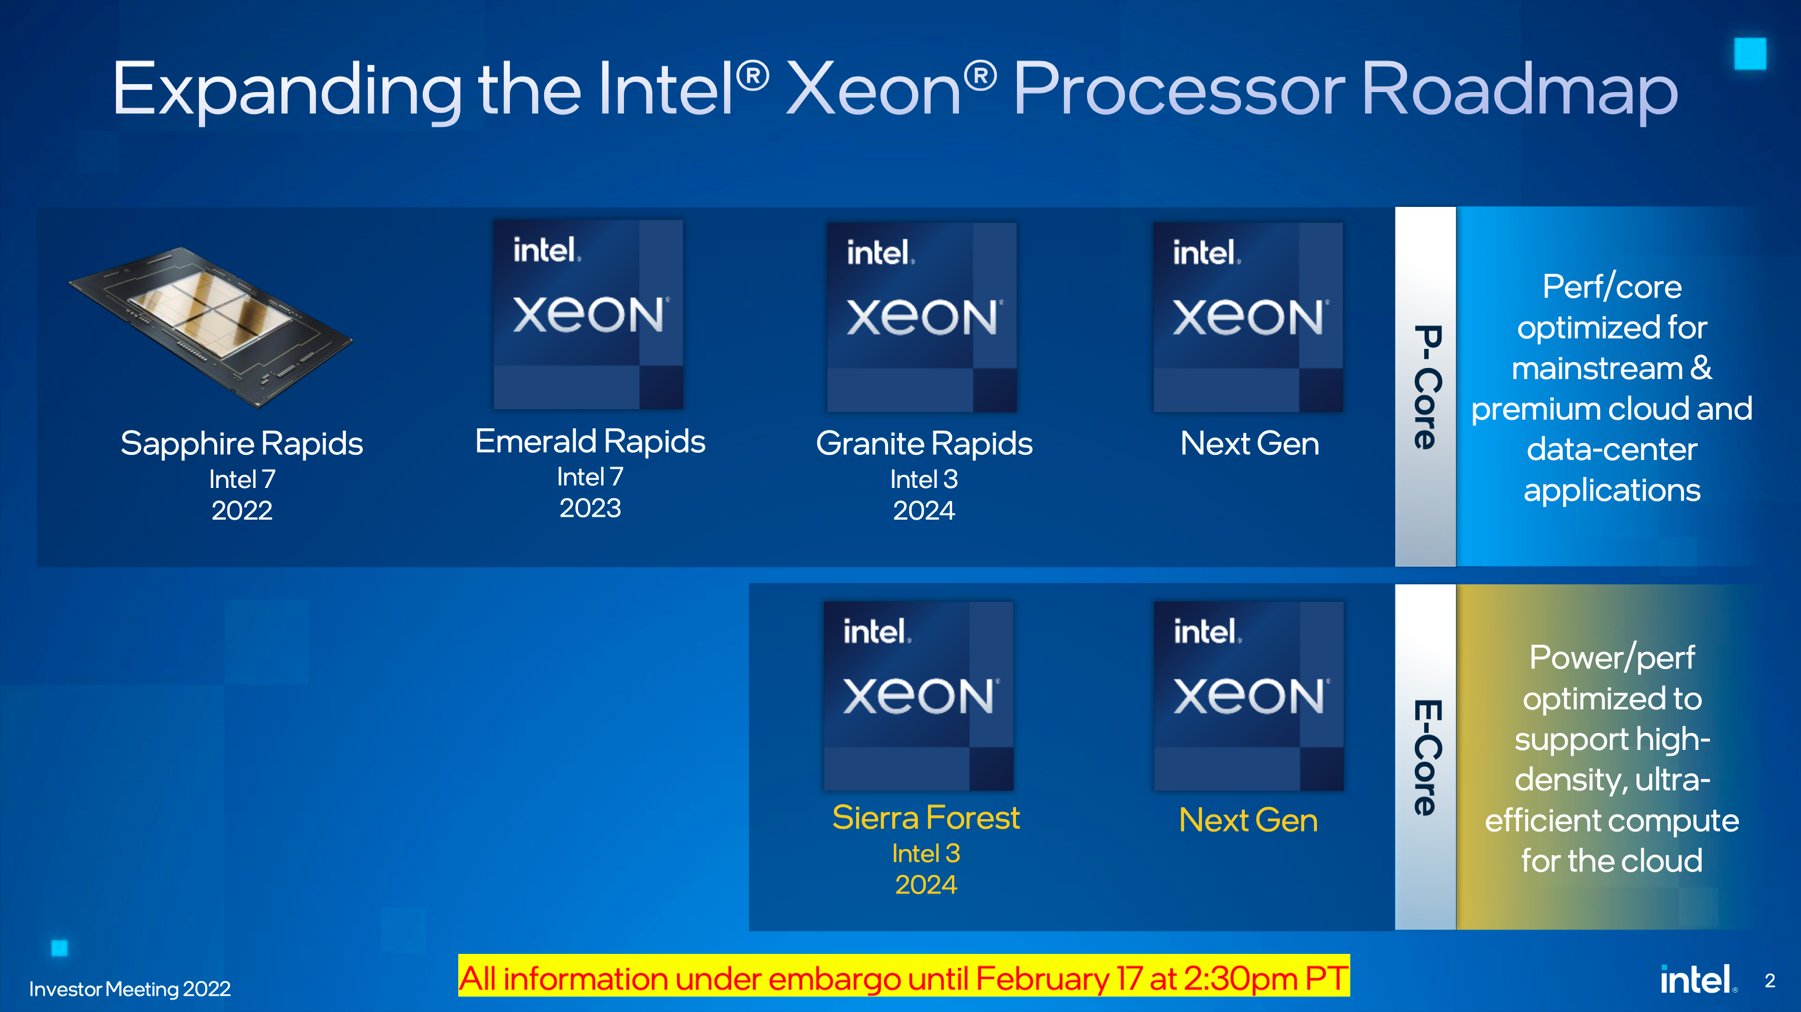 Intel's nextgen Xeon "Avenue City" reference platform detailed